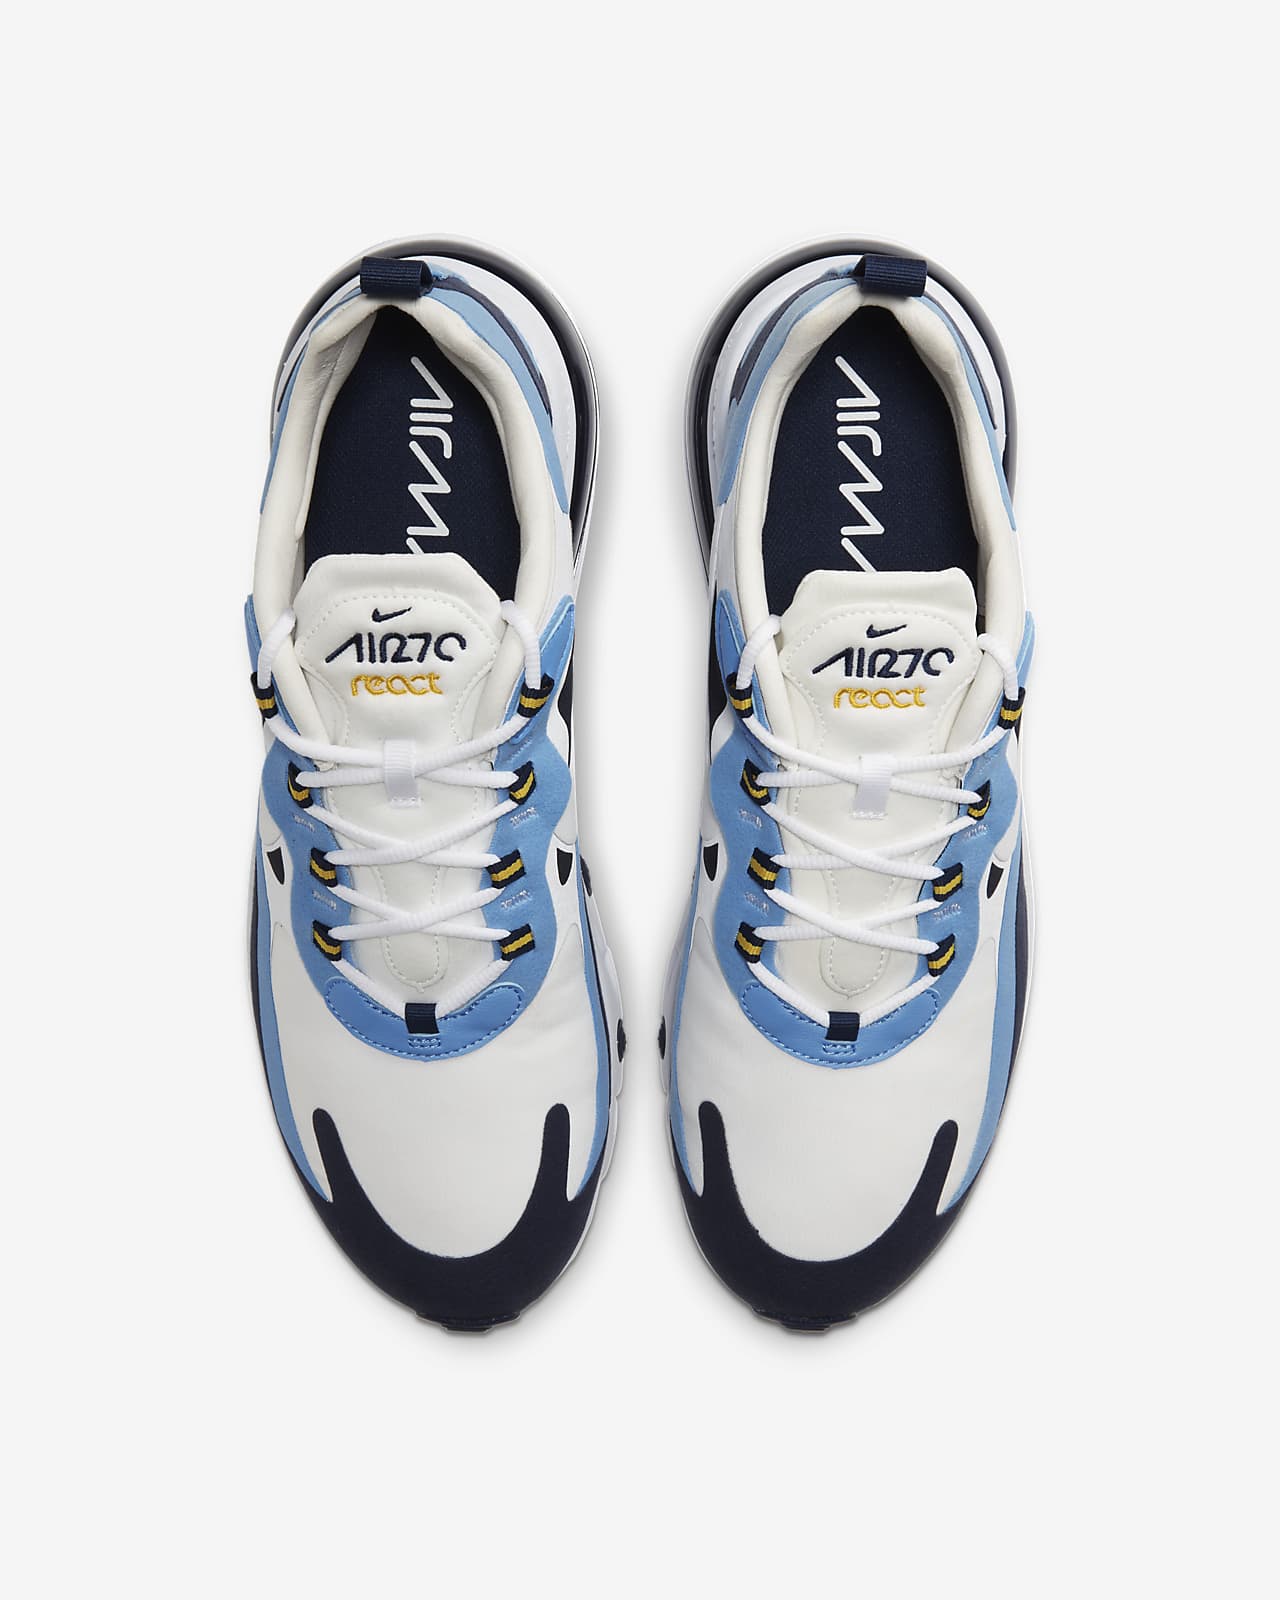 Nike Air Max 270 React ENG Mens Running Trainers